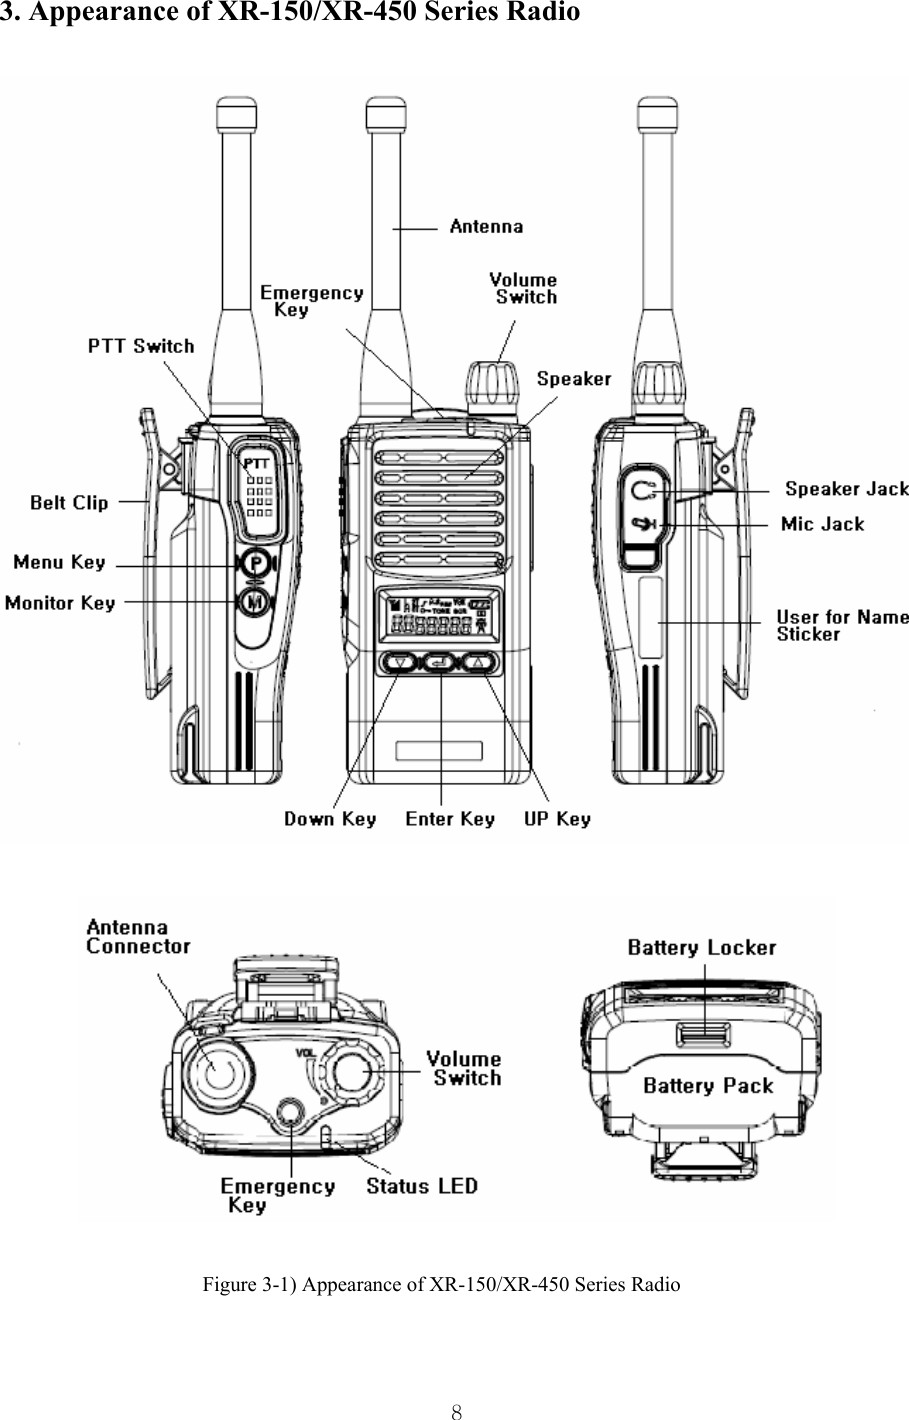  8 3. Appearance of XR-150/XR-450 Series Radio      Figure 3-1) Appearance of XR-150/XR-450 Series Radio  